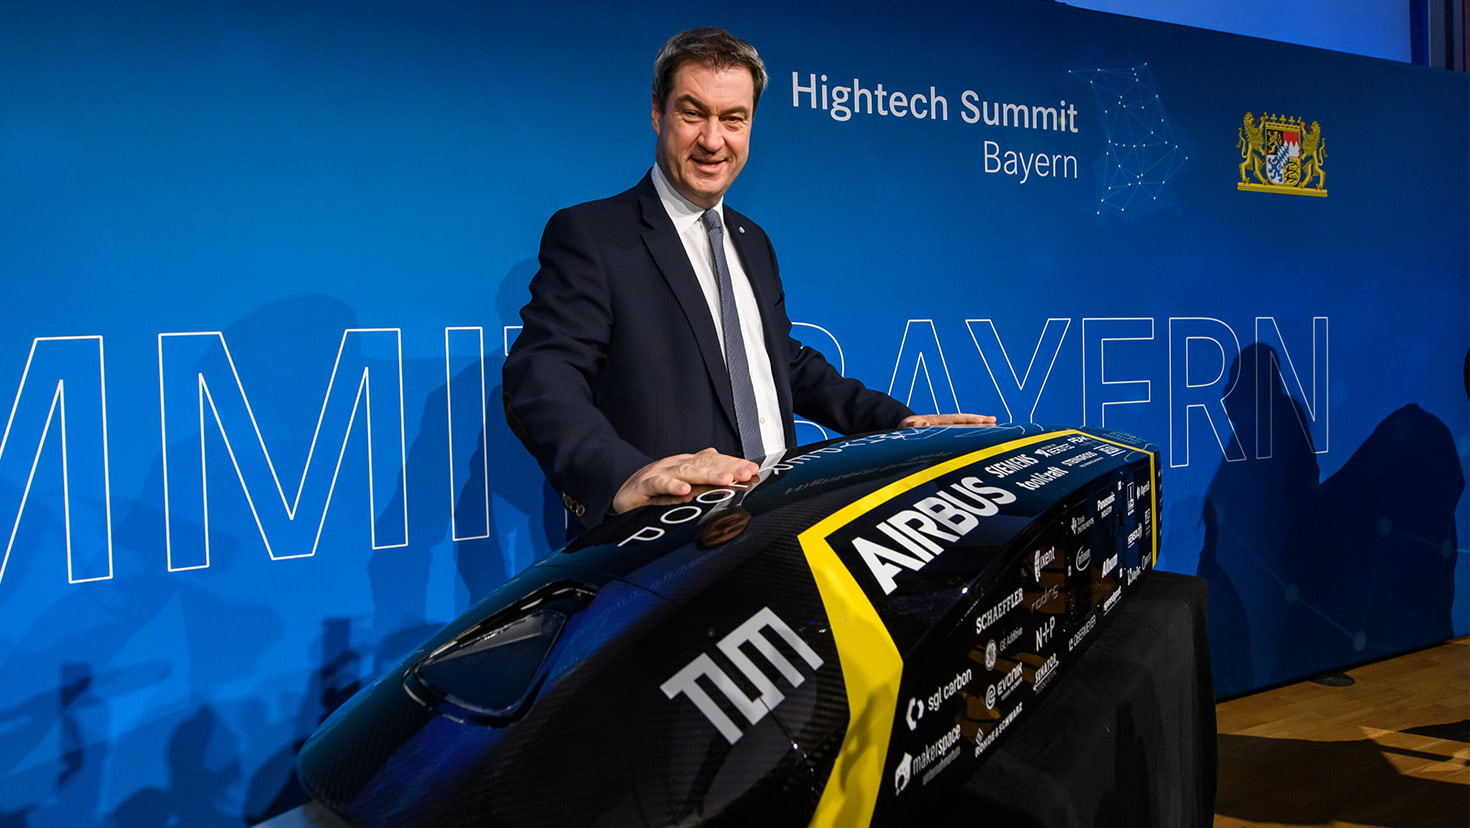 Ministerpräsident Dr. Markus Söder, MdL, bei einem Hyperloop-Modell.